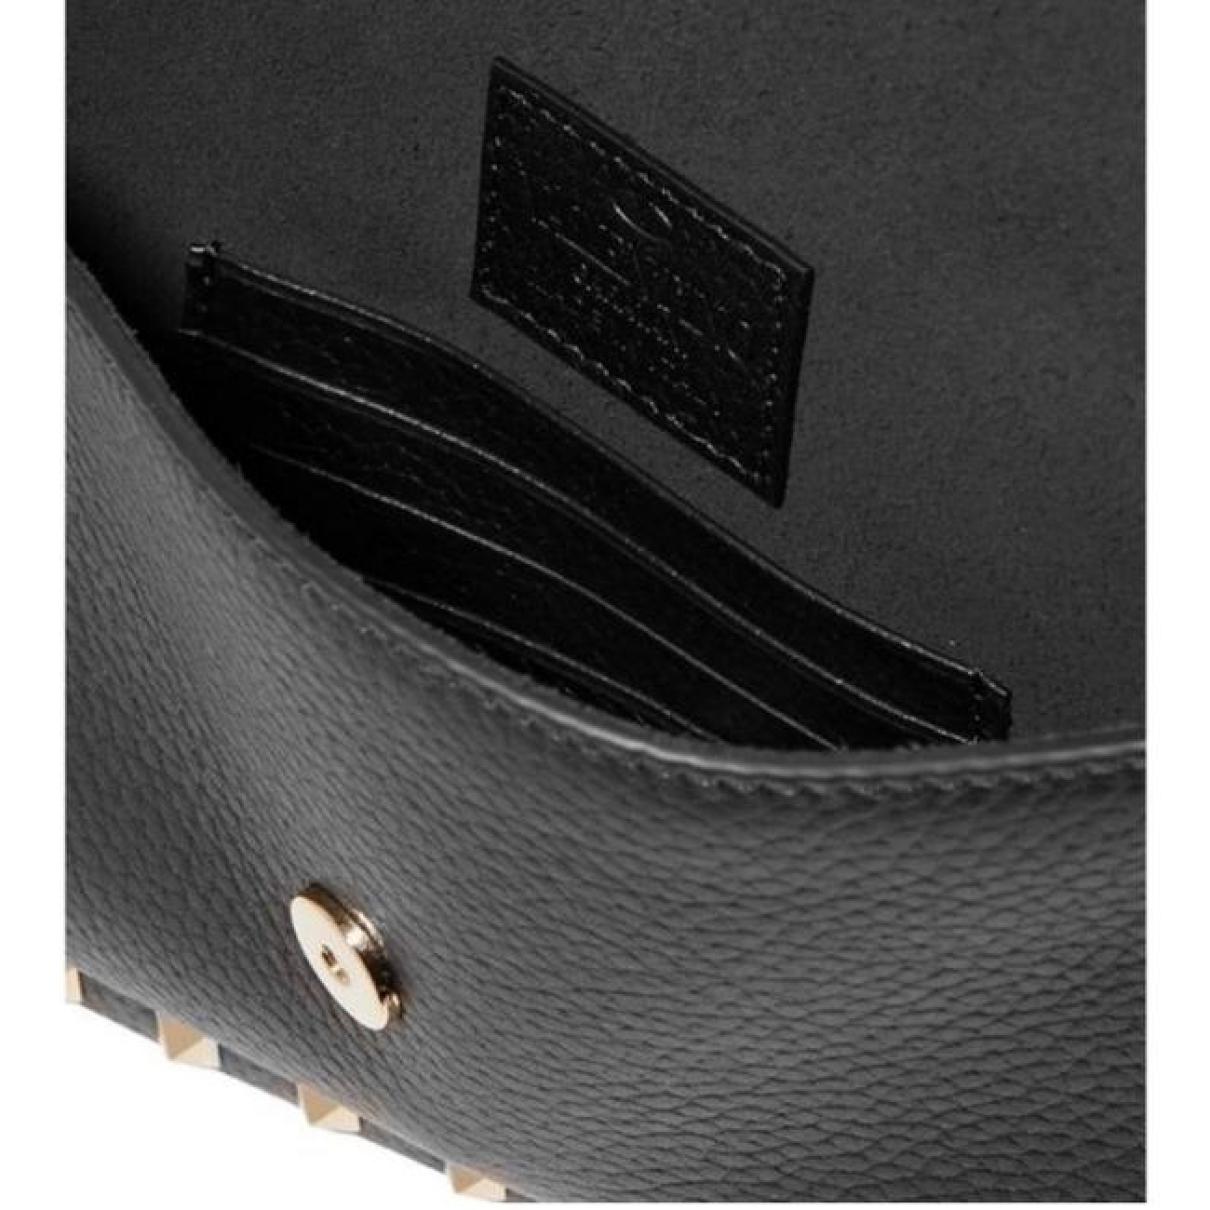 Rockstud leather clutch bag - 2